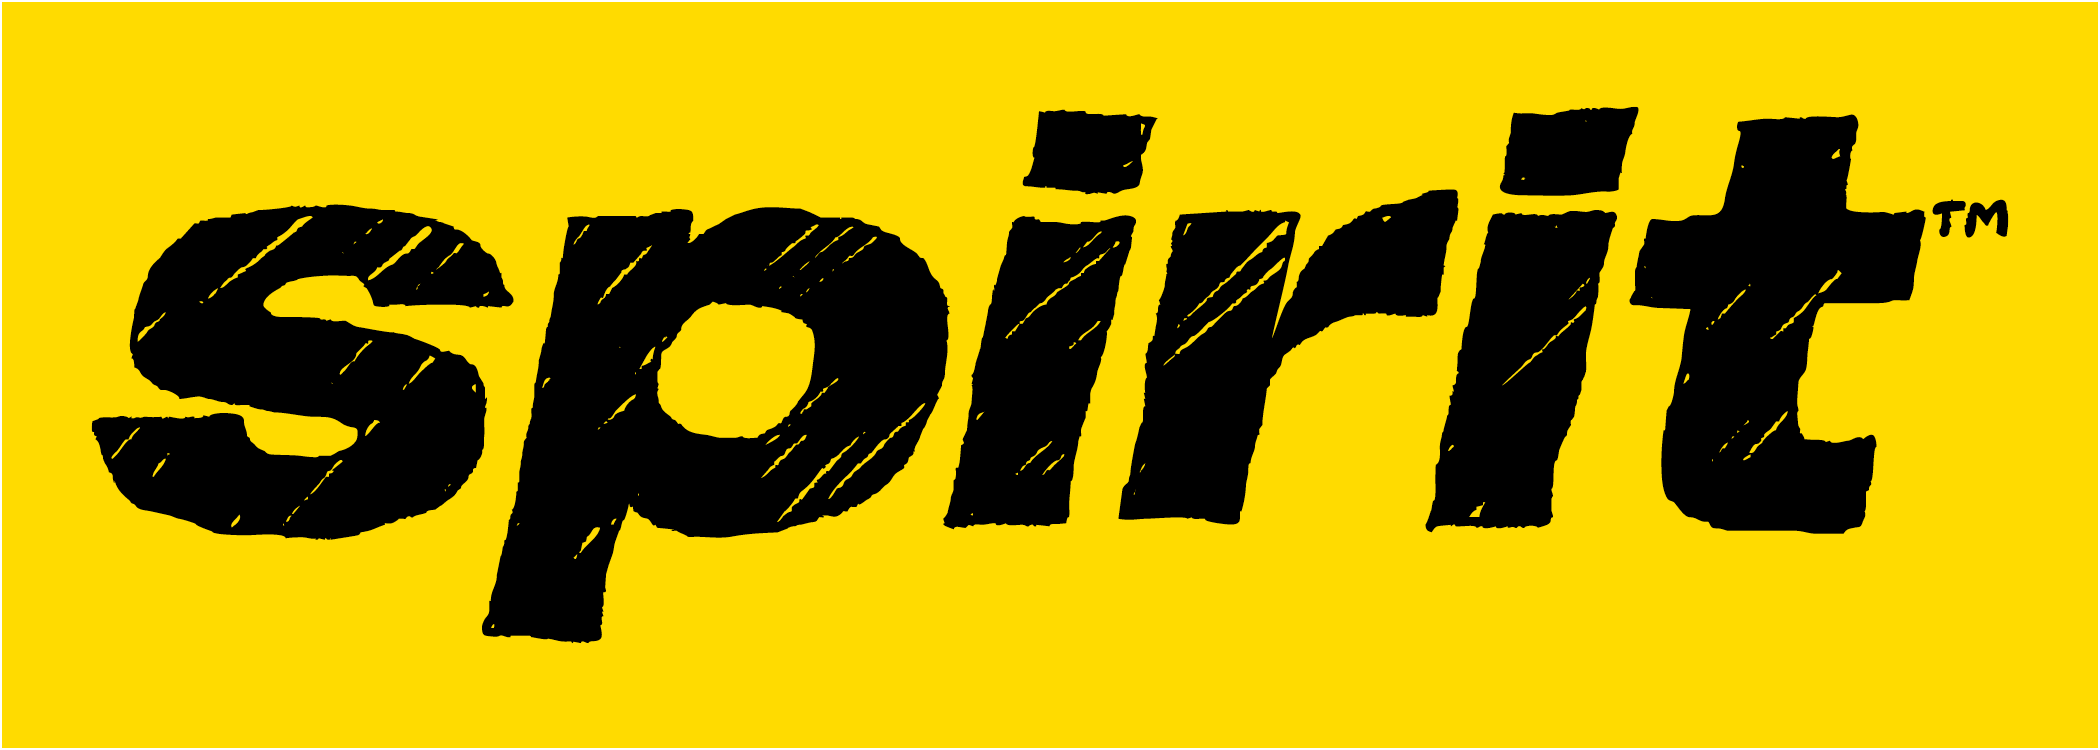 Resultado de imagen para spirit airlines  logo